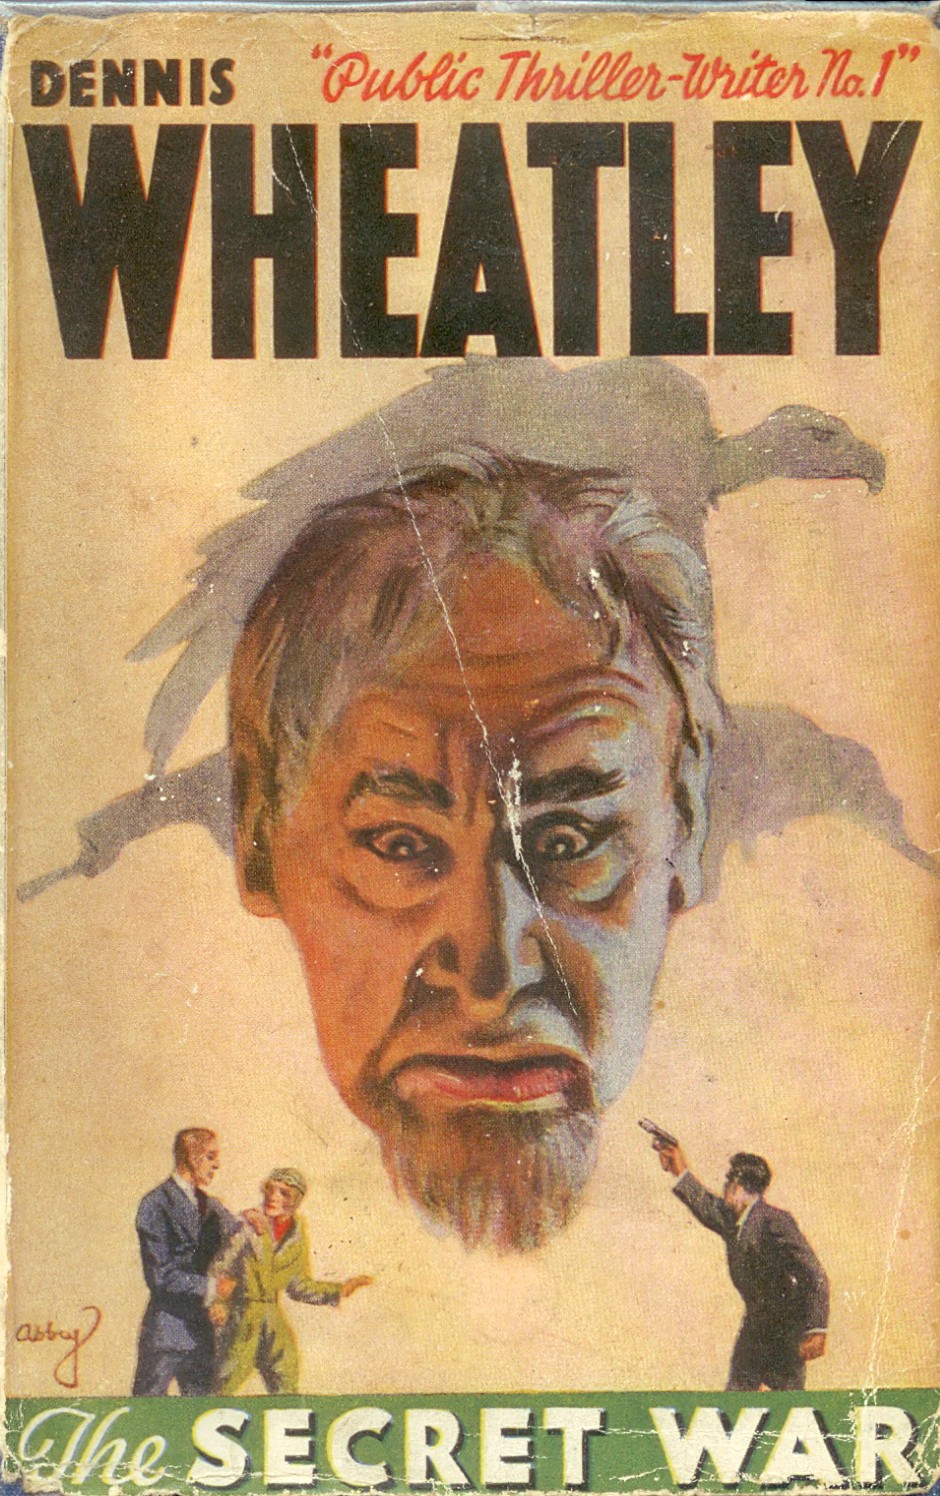 (1954 reprint cover for The Secret War)